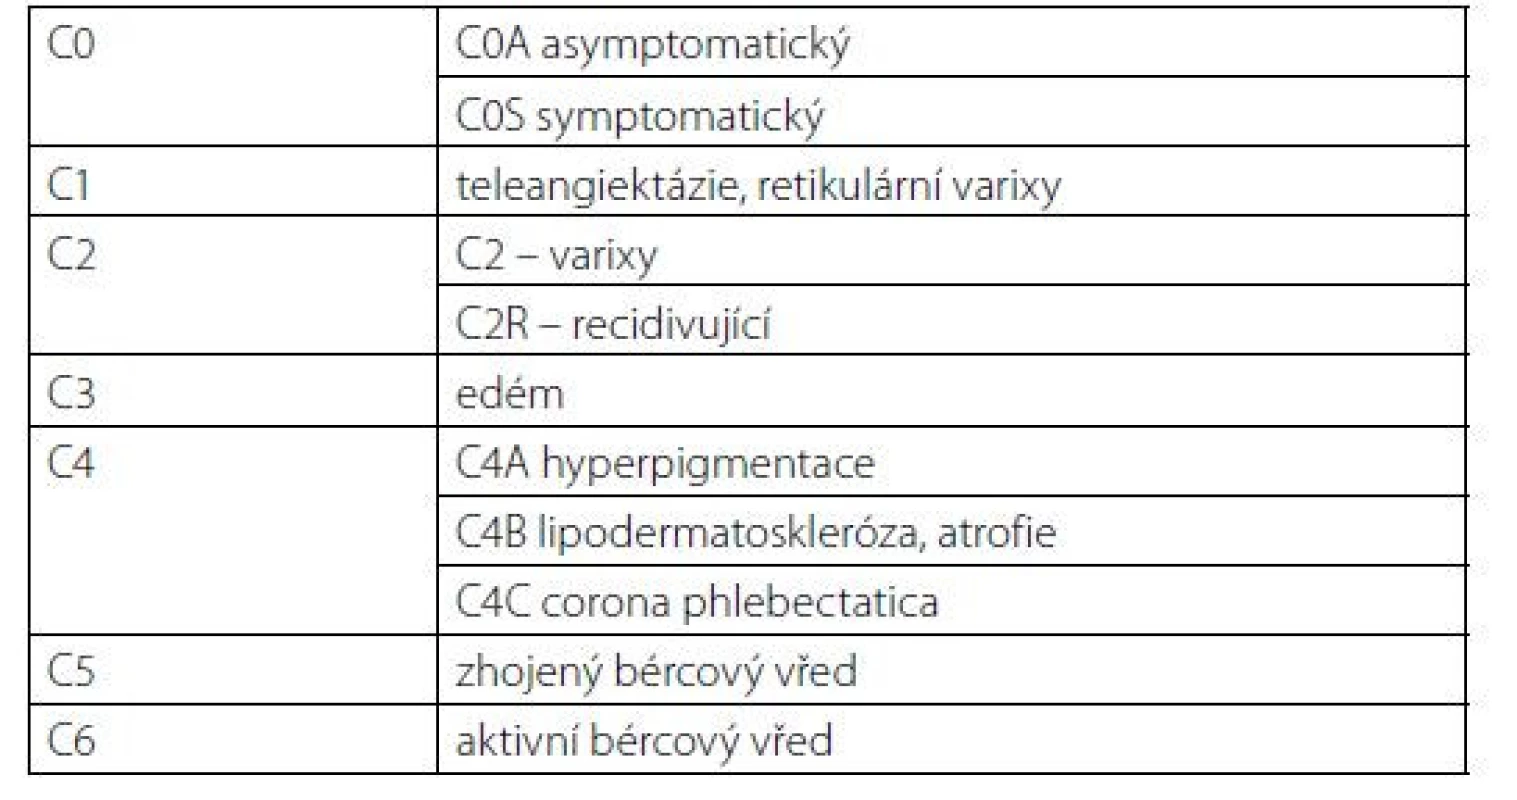 Klinická klasifikace CEAP